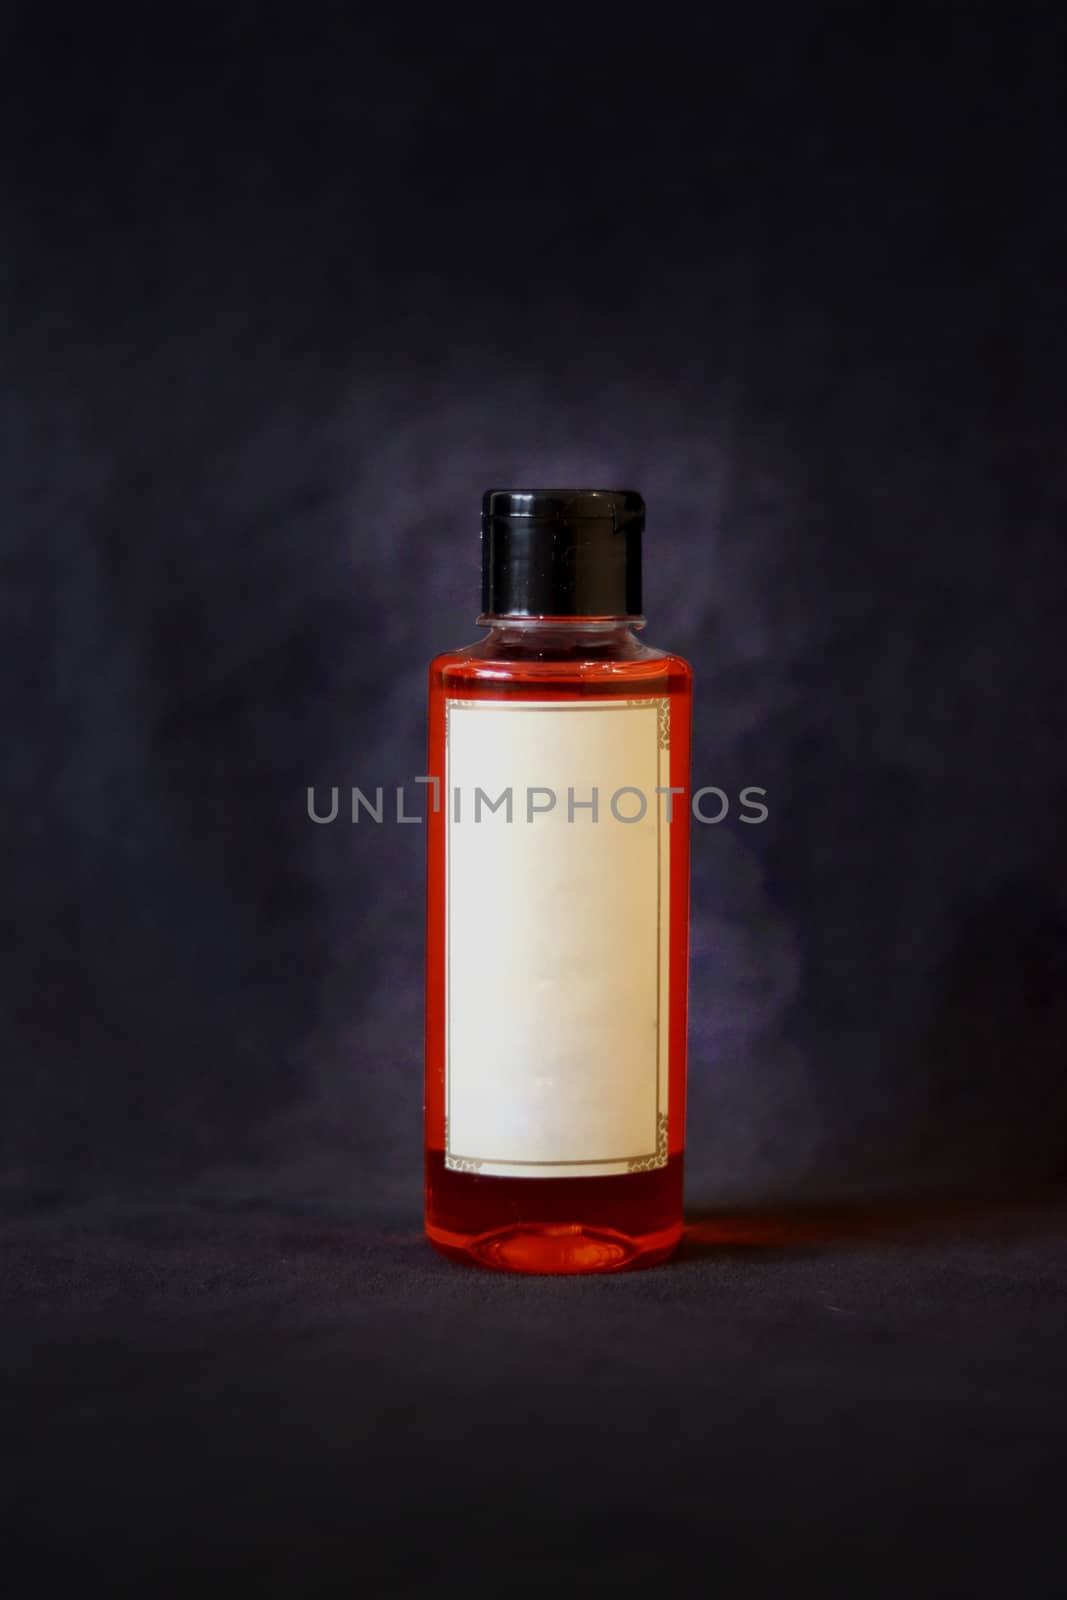 orange oil bottle with off white label and black bottle cap on dark grey textured background.